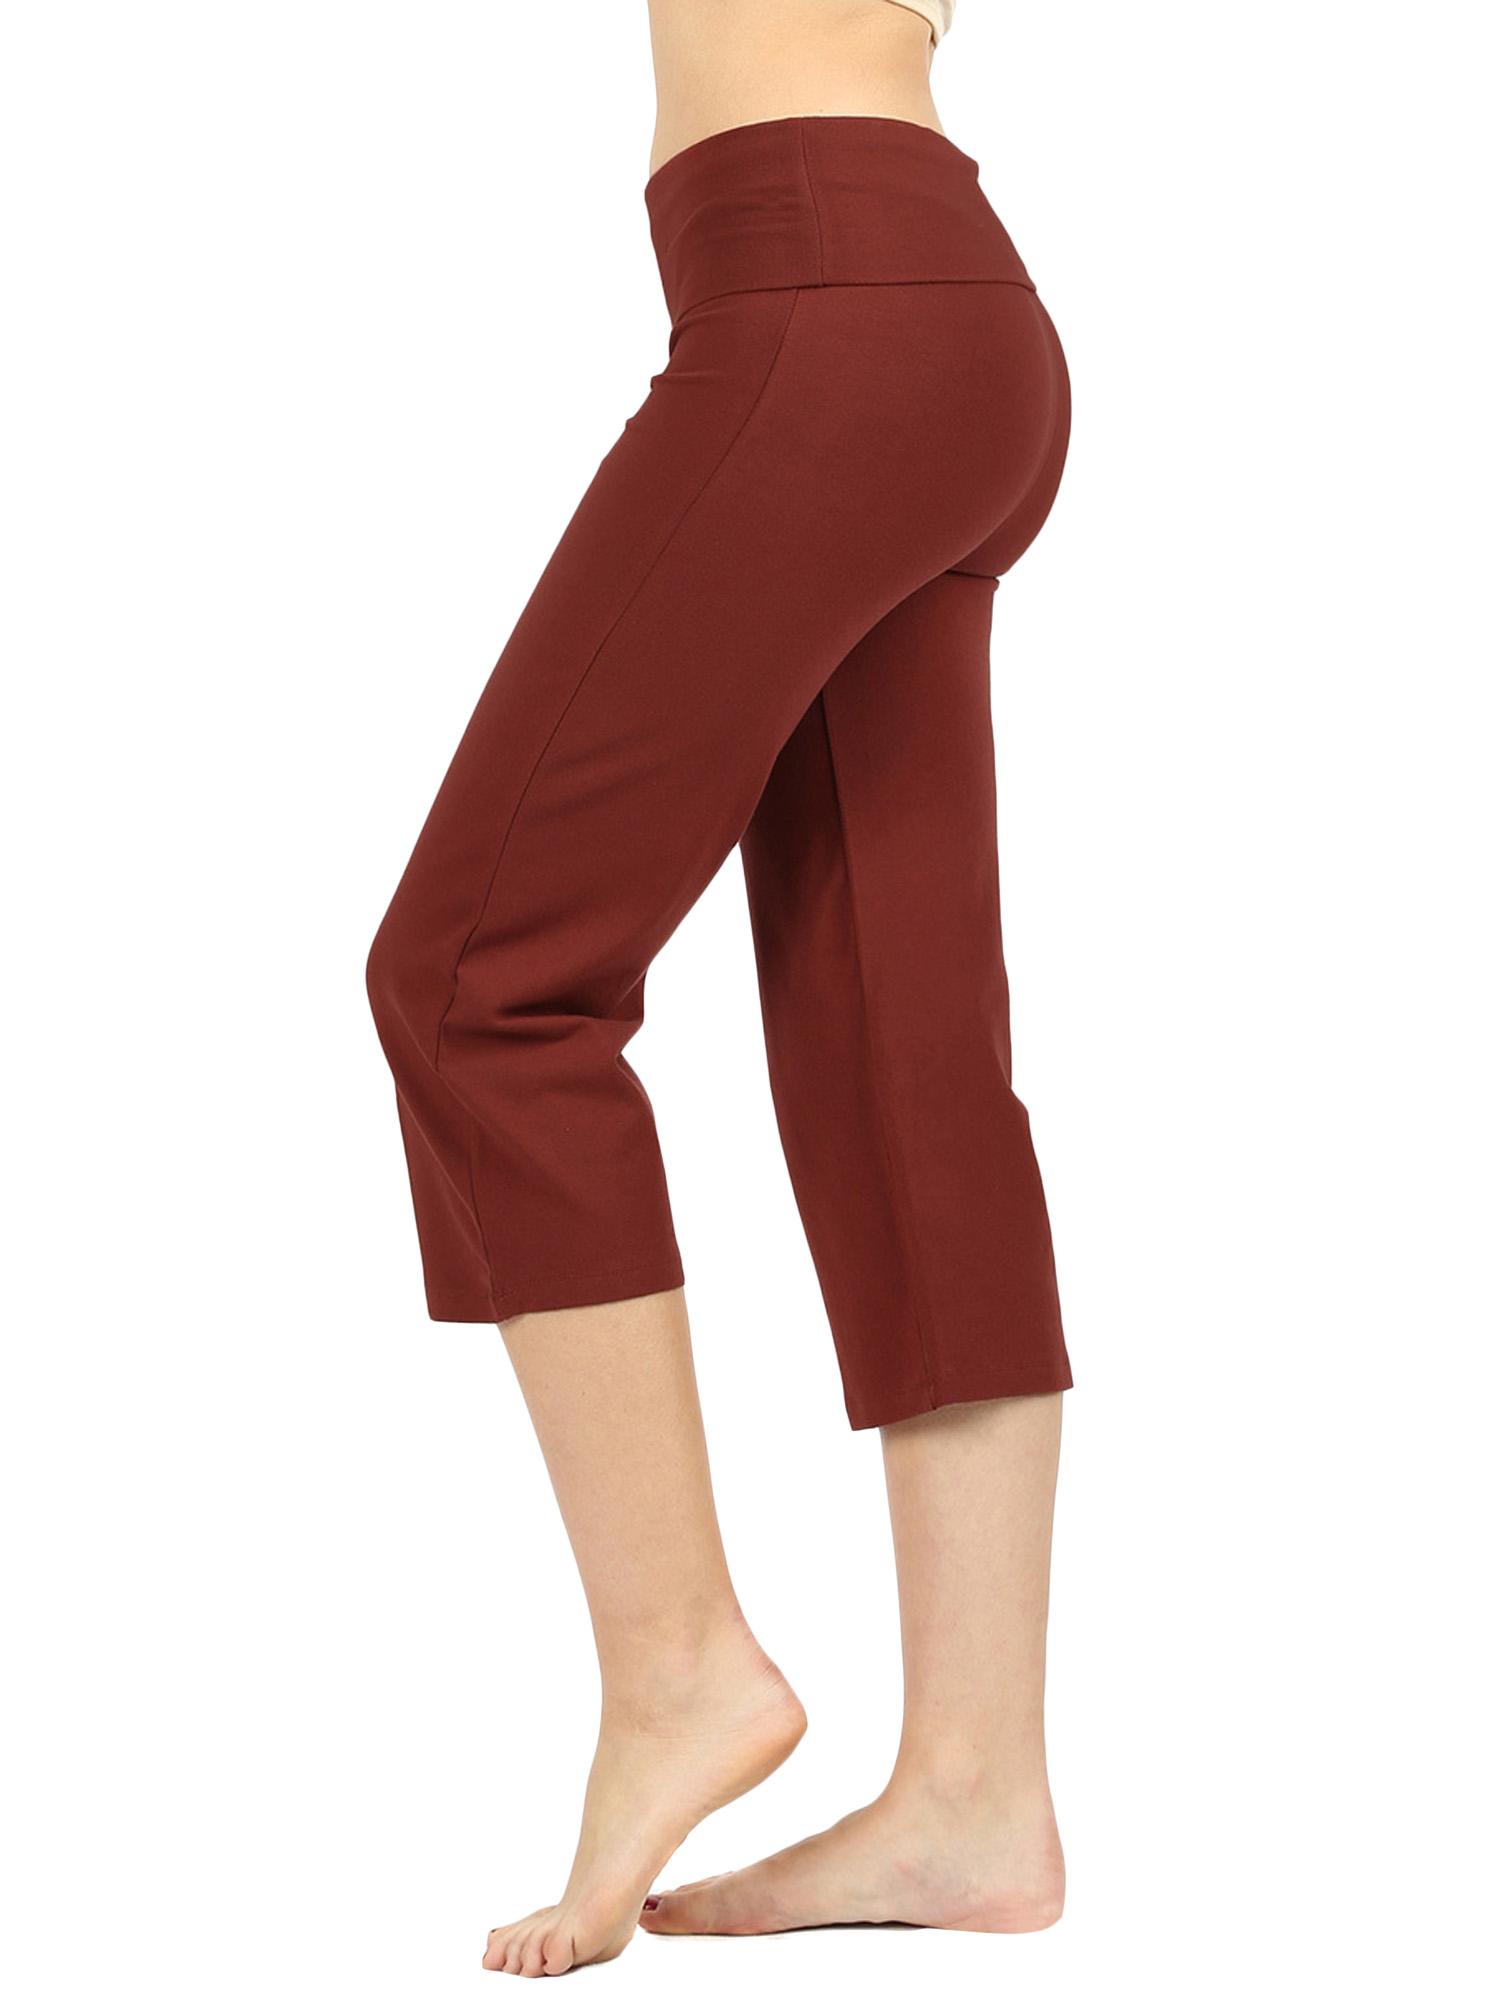 Women's Cropped Yoga Pants/Capris- Organic Cotton/Bamboo Stretch